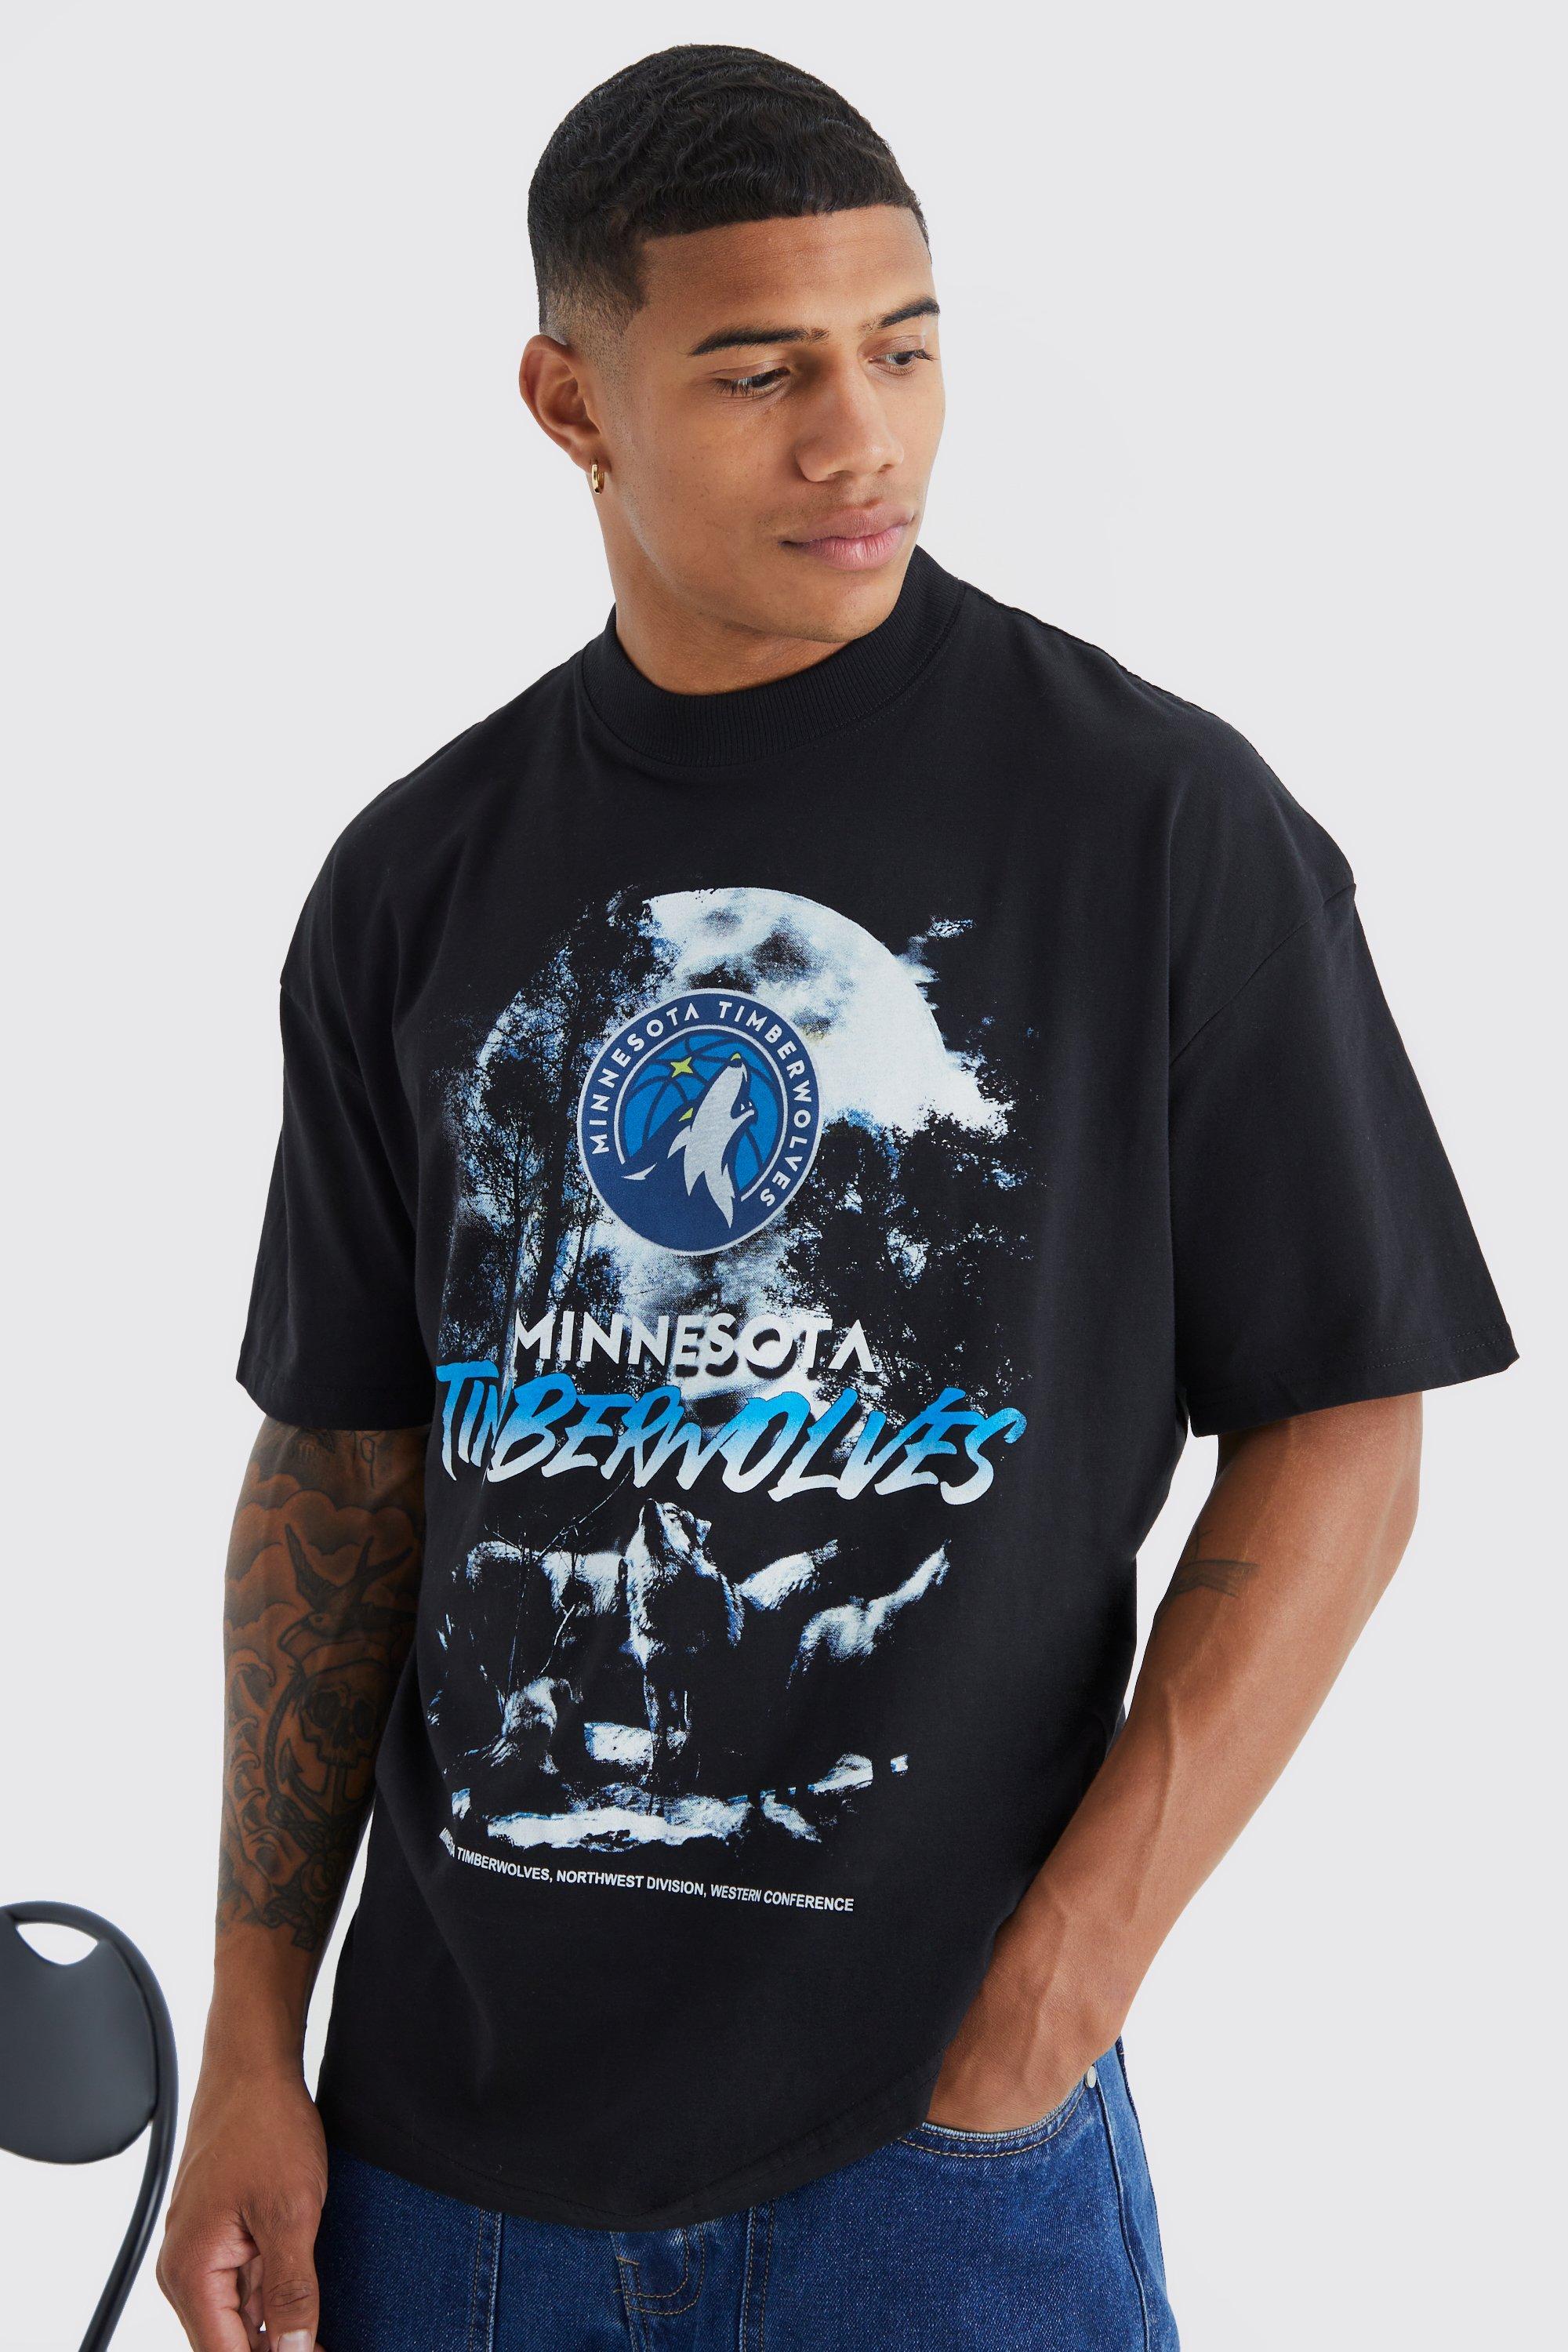 timberwolves t shirt